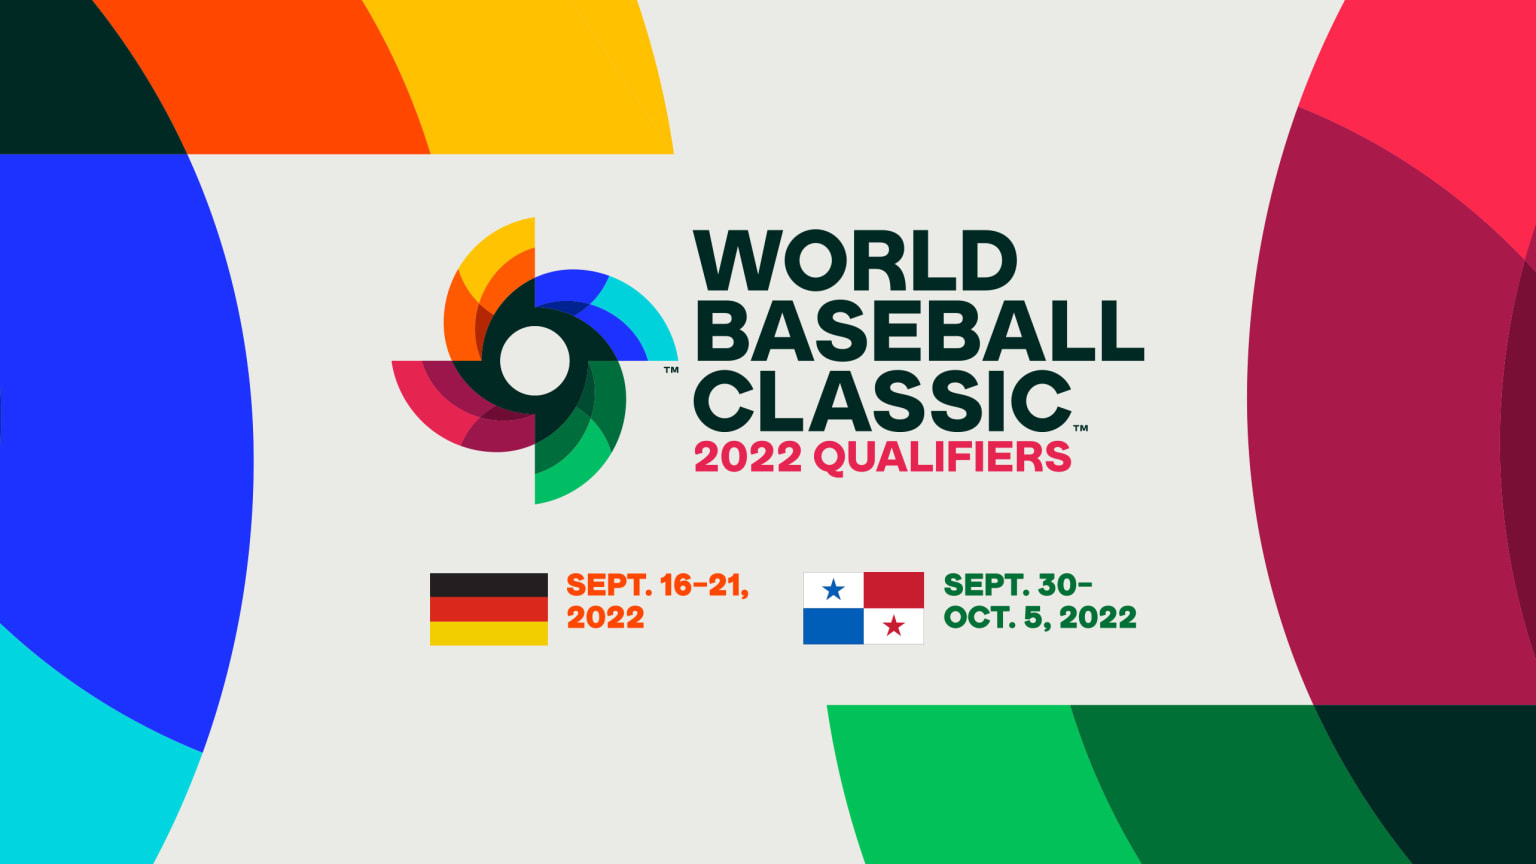 Panama and Nicaragua qualify for World Baseball Classic 2023